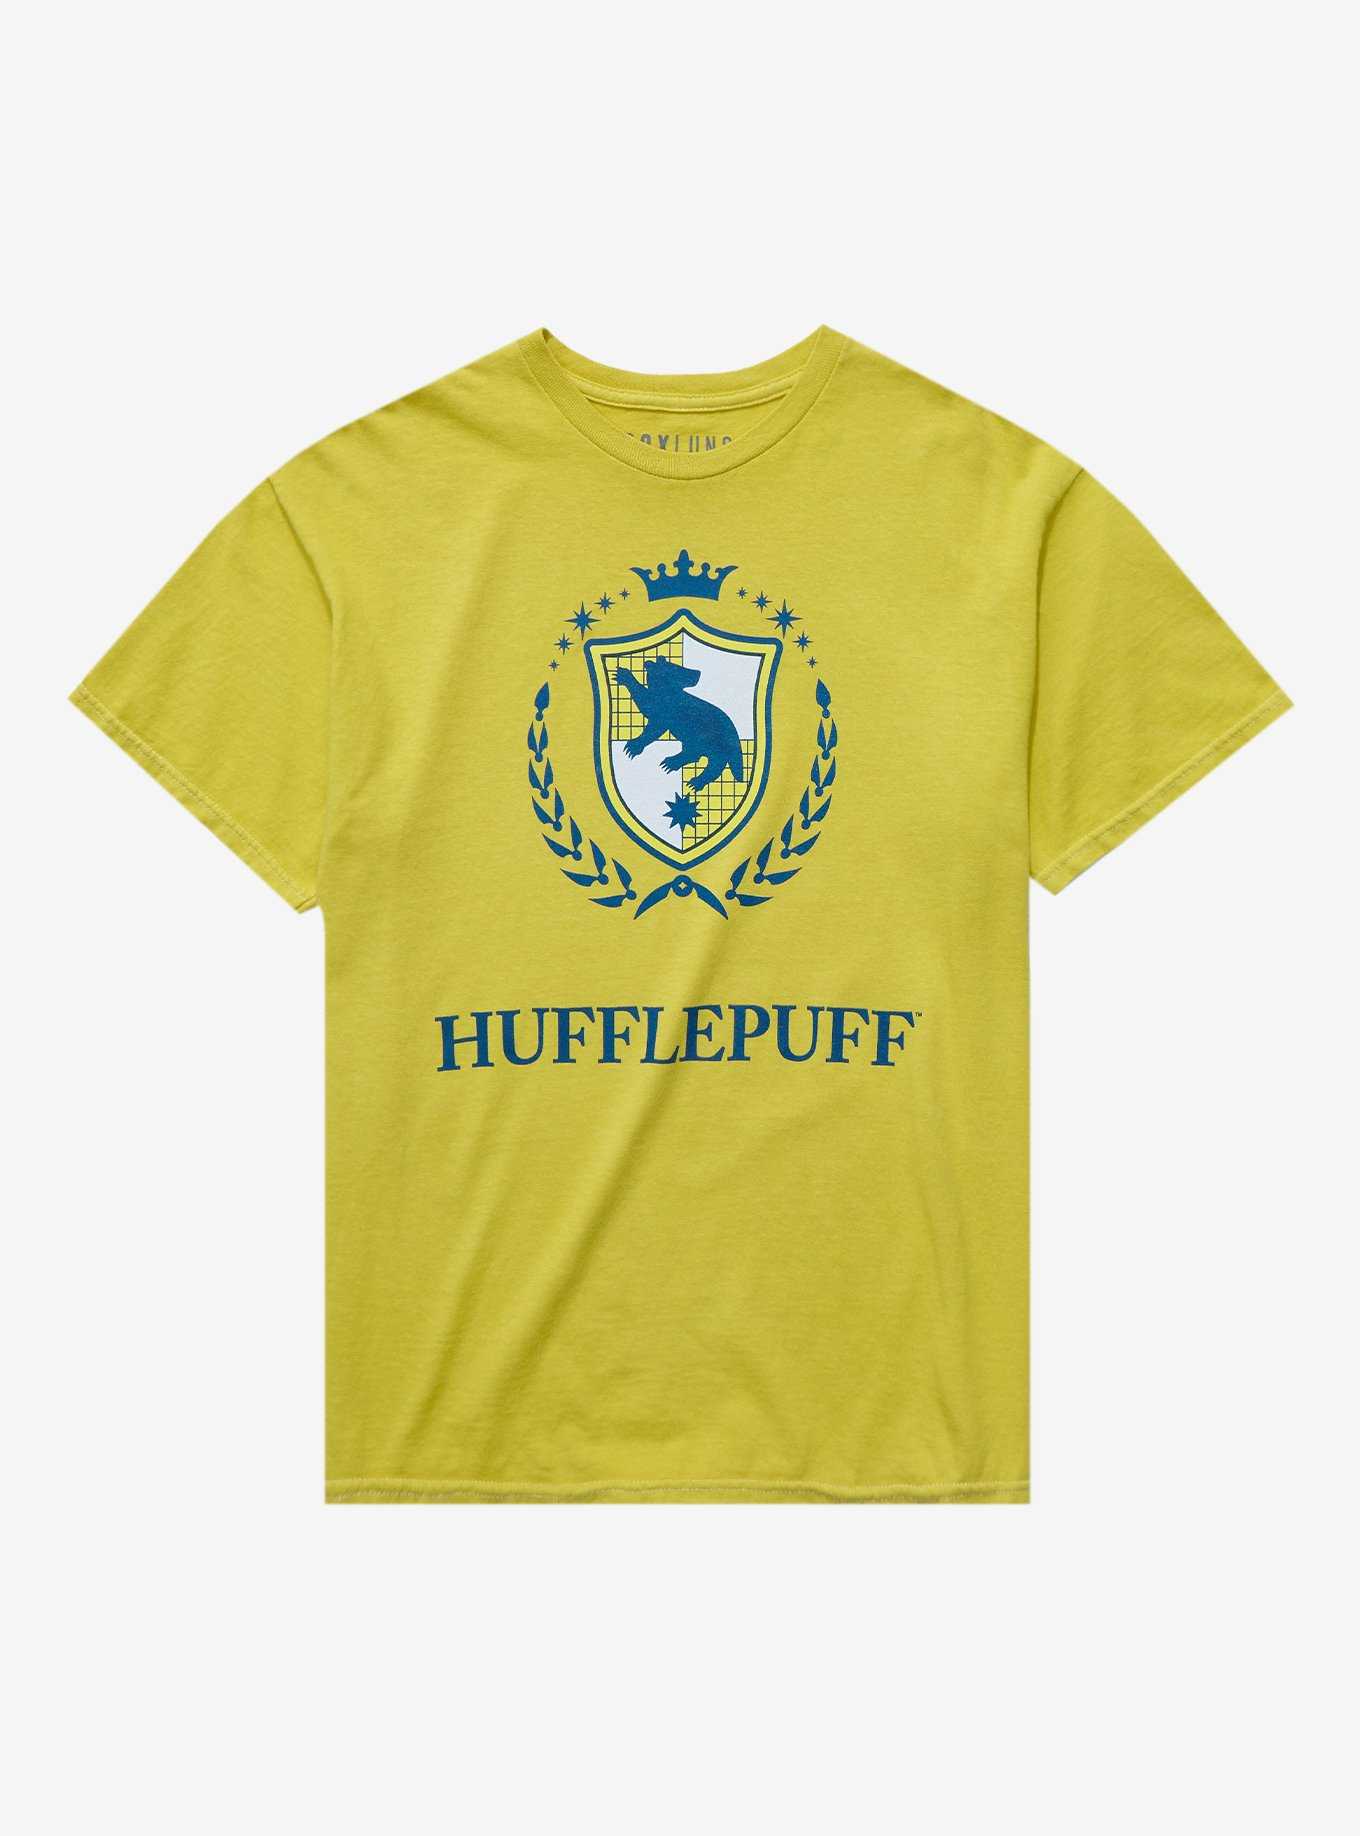 Harry Potter - Hufflepuff  Ropa y accesorios para fans de merch